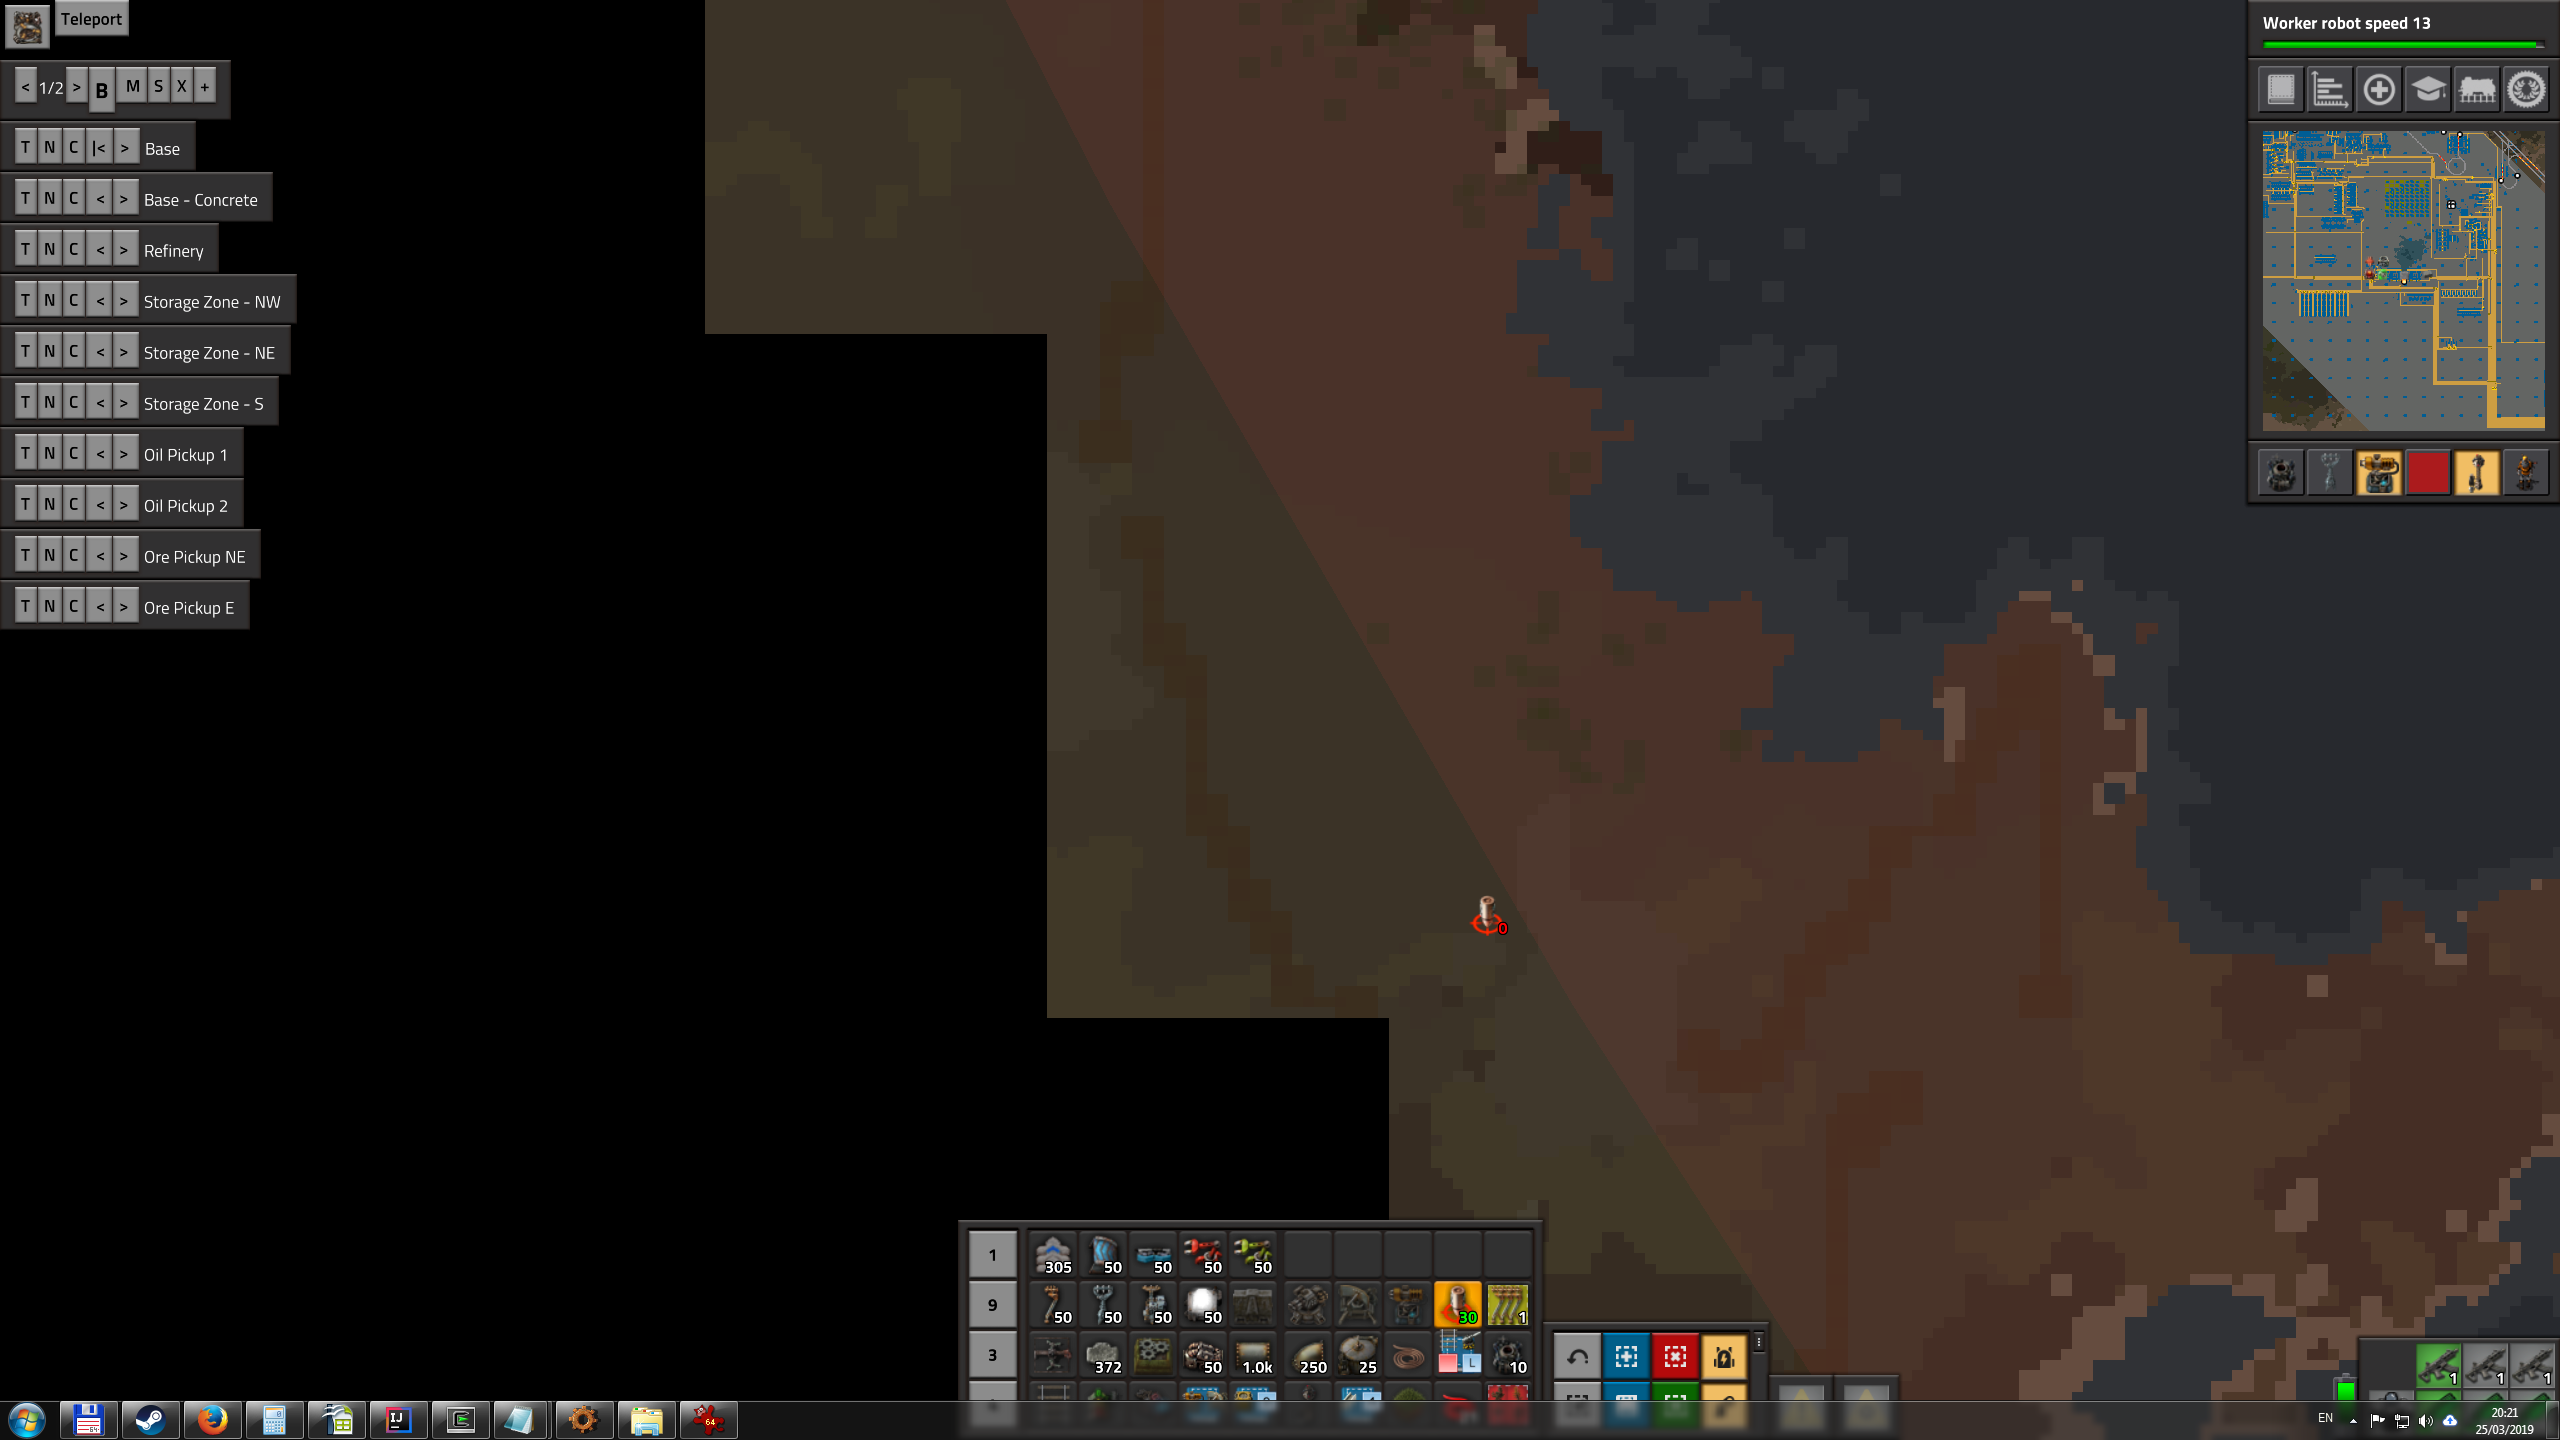 Screenshot 1 - map view.PNG